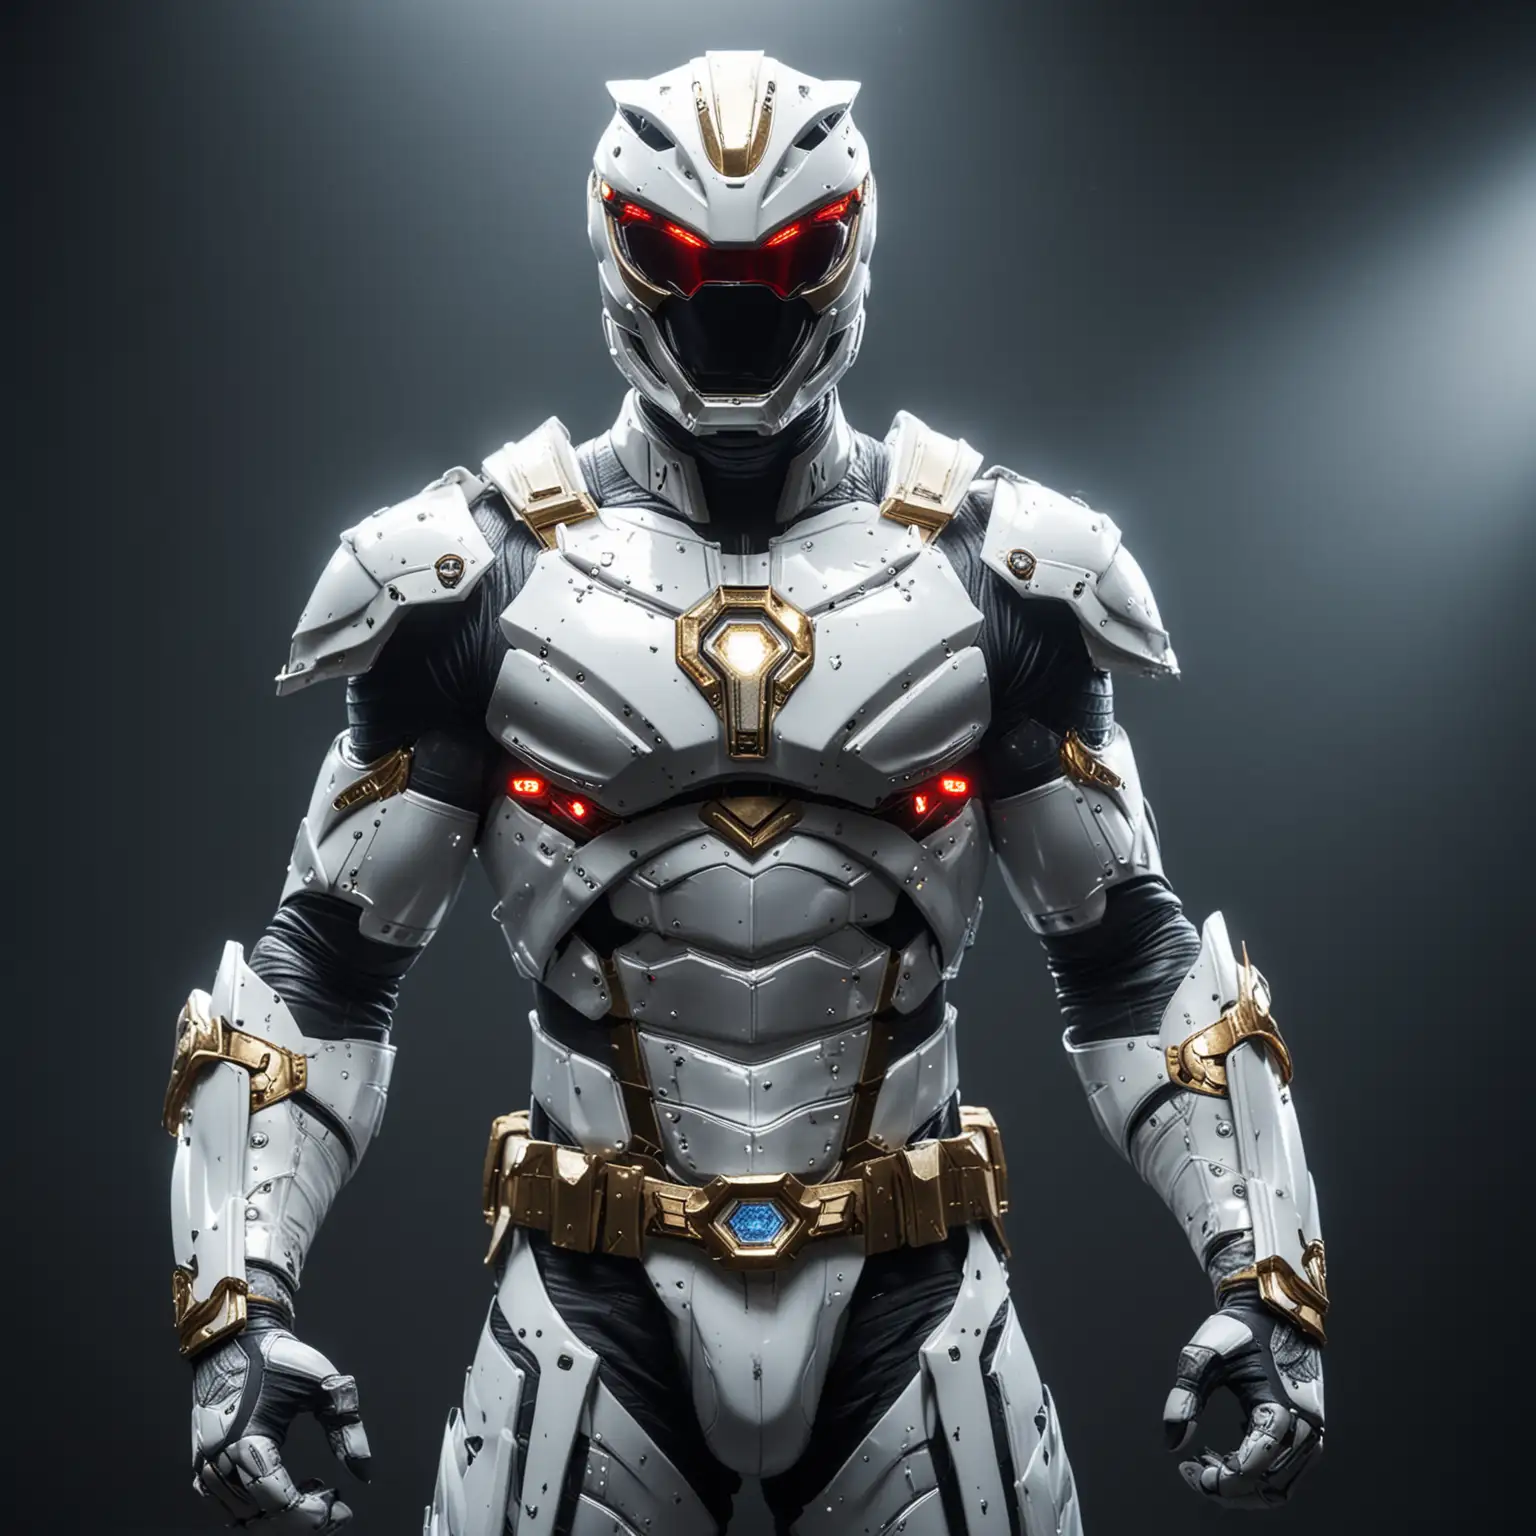 Futuristic White Power Ranger in Illuminated Armor